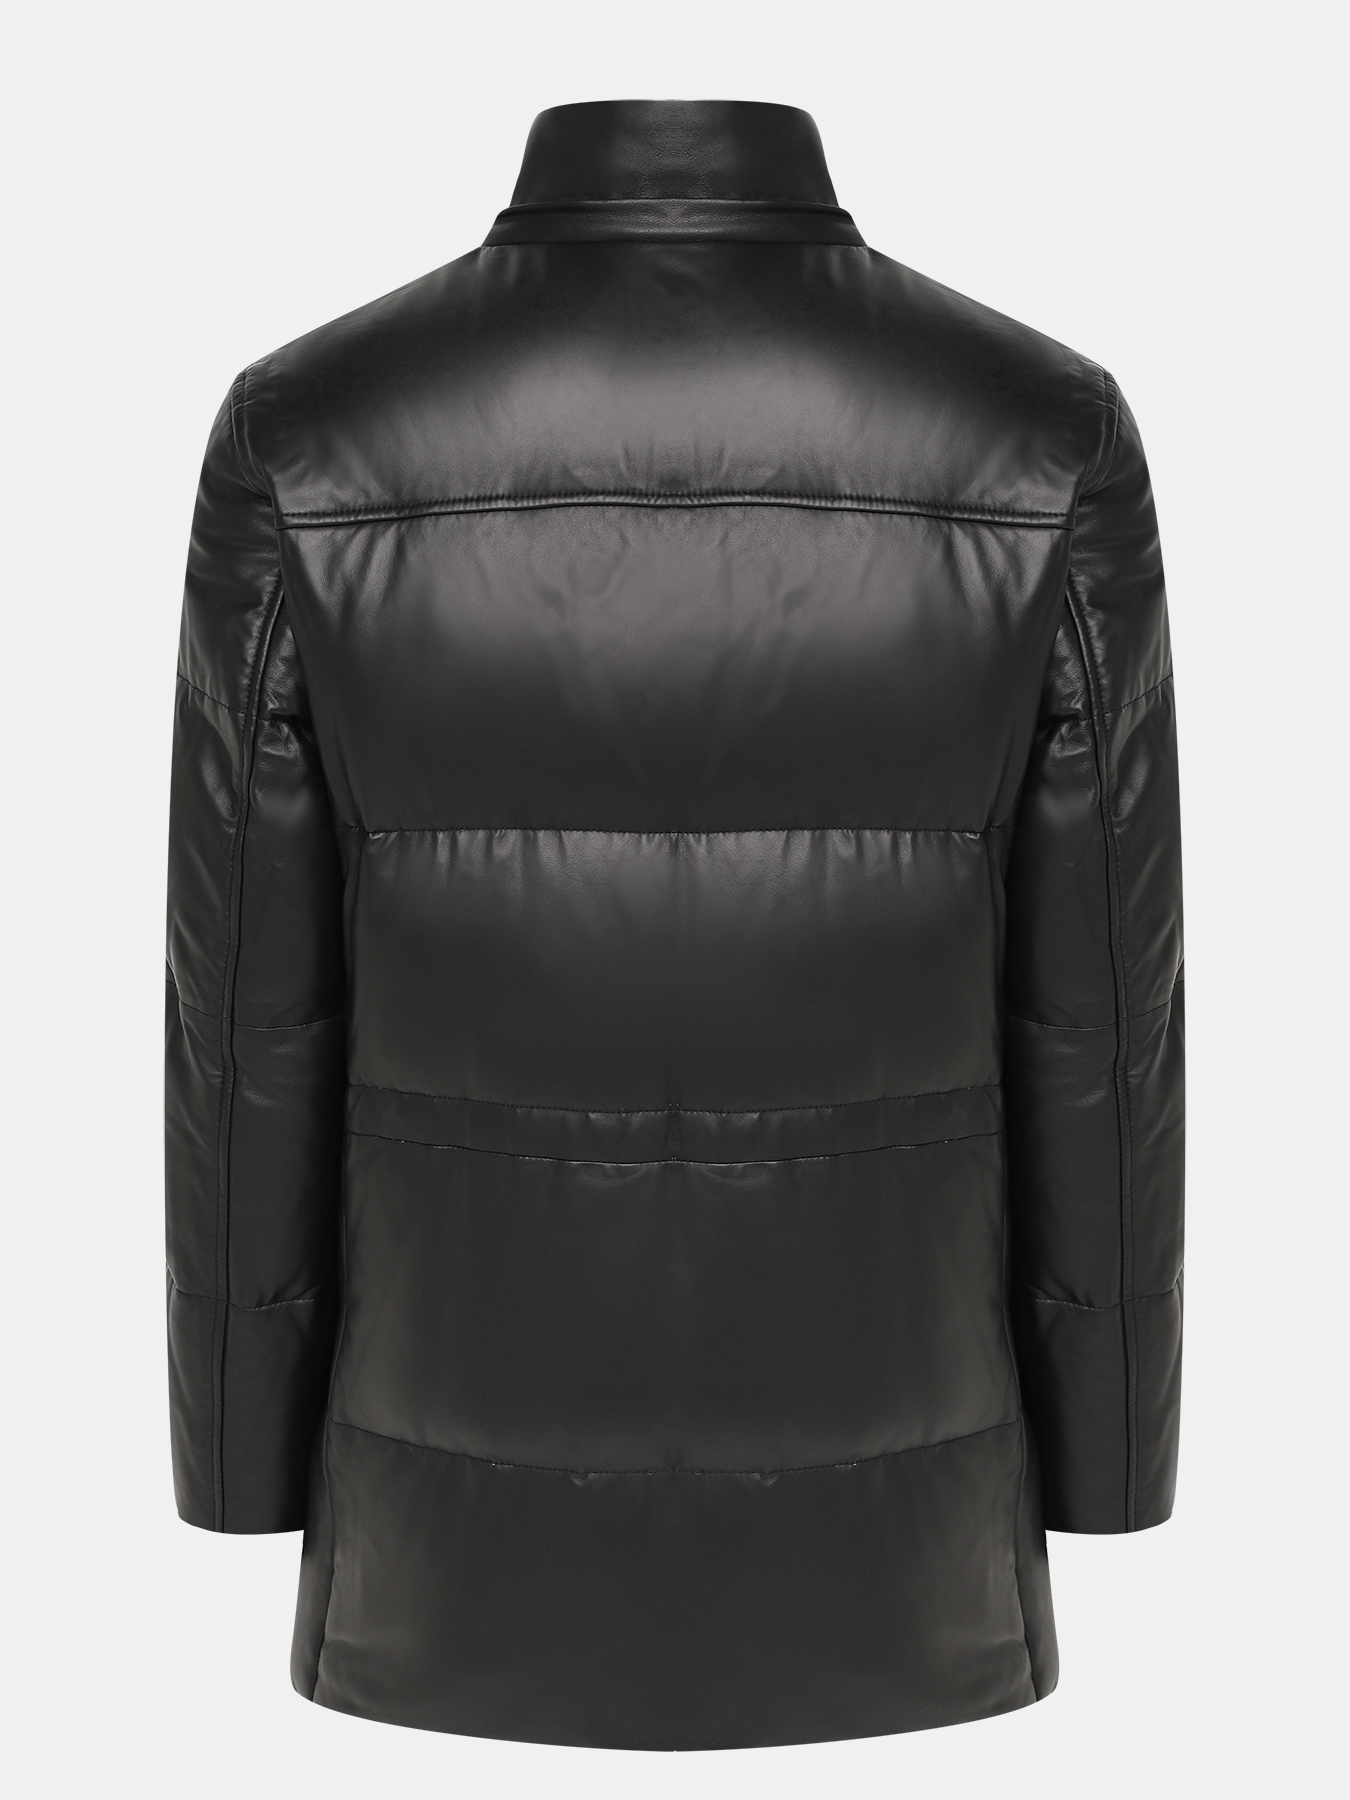 Кожаная куртка Ritter 390990-031, цвет черный, размер 60 - фото 6